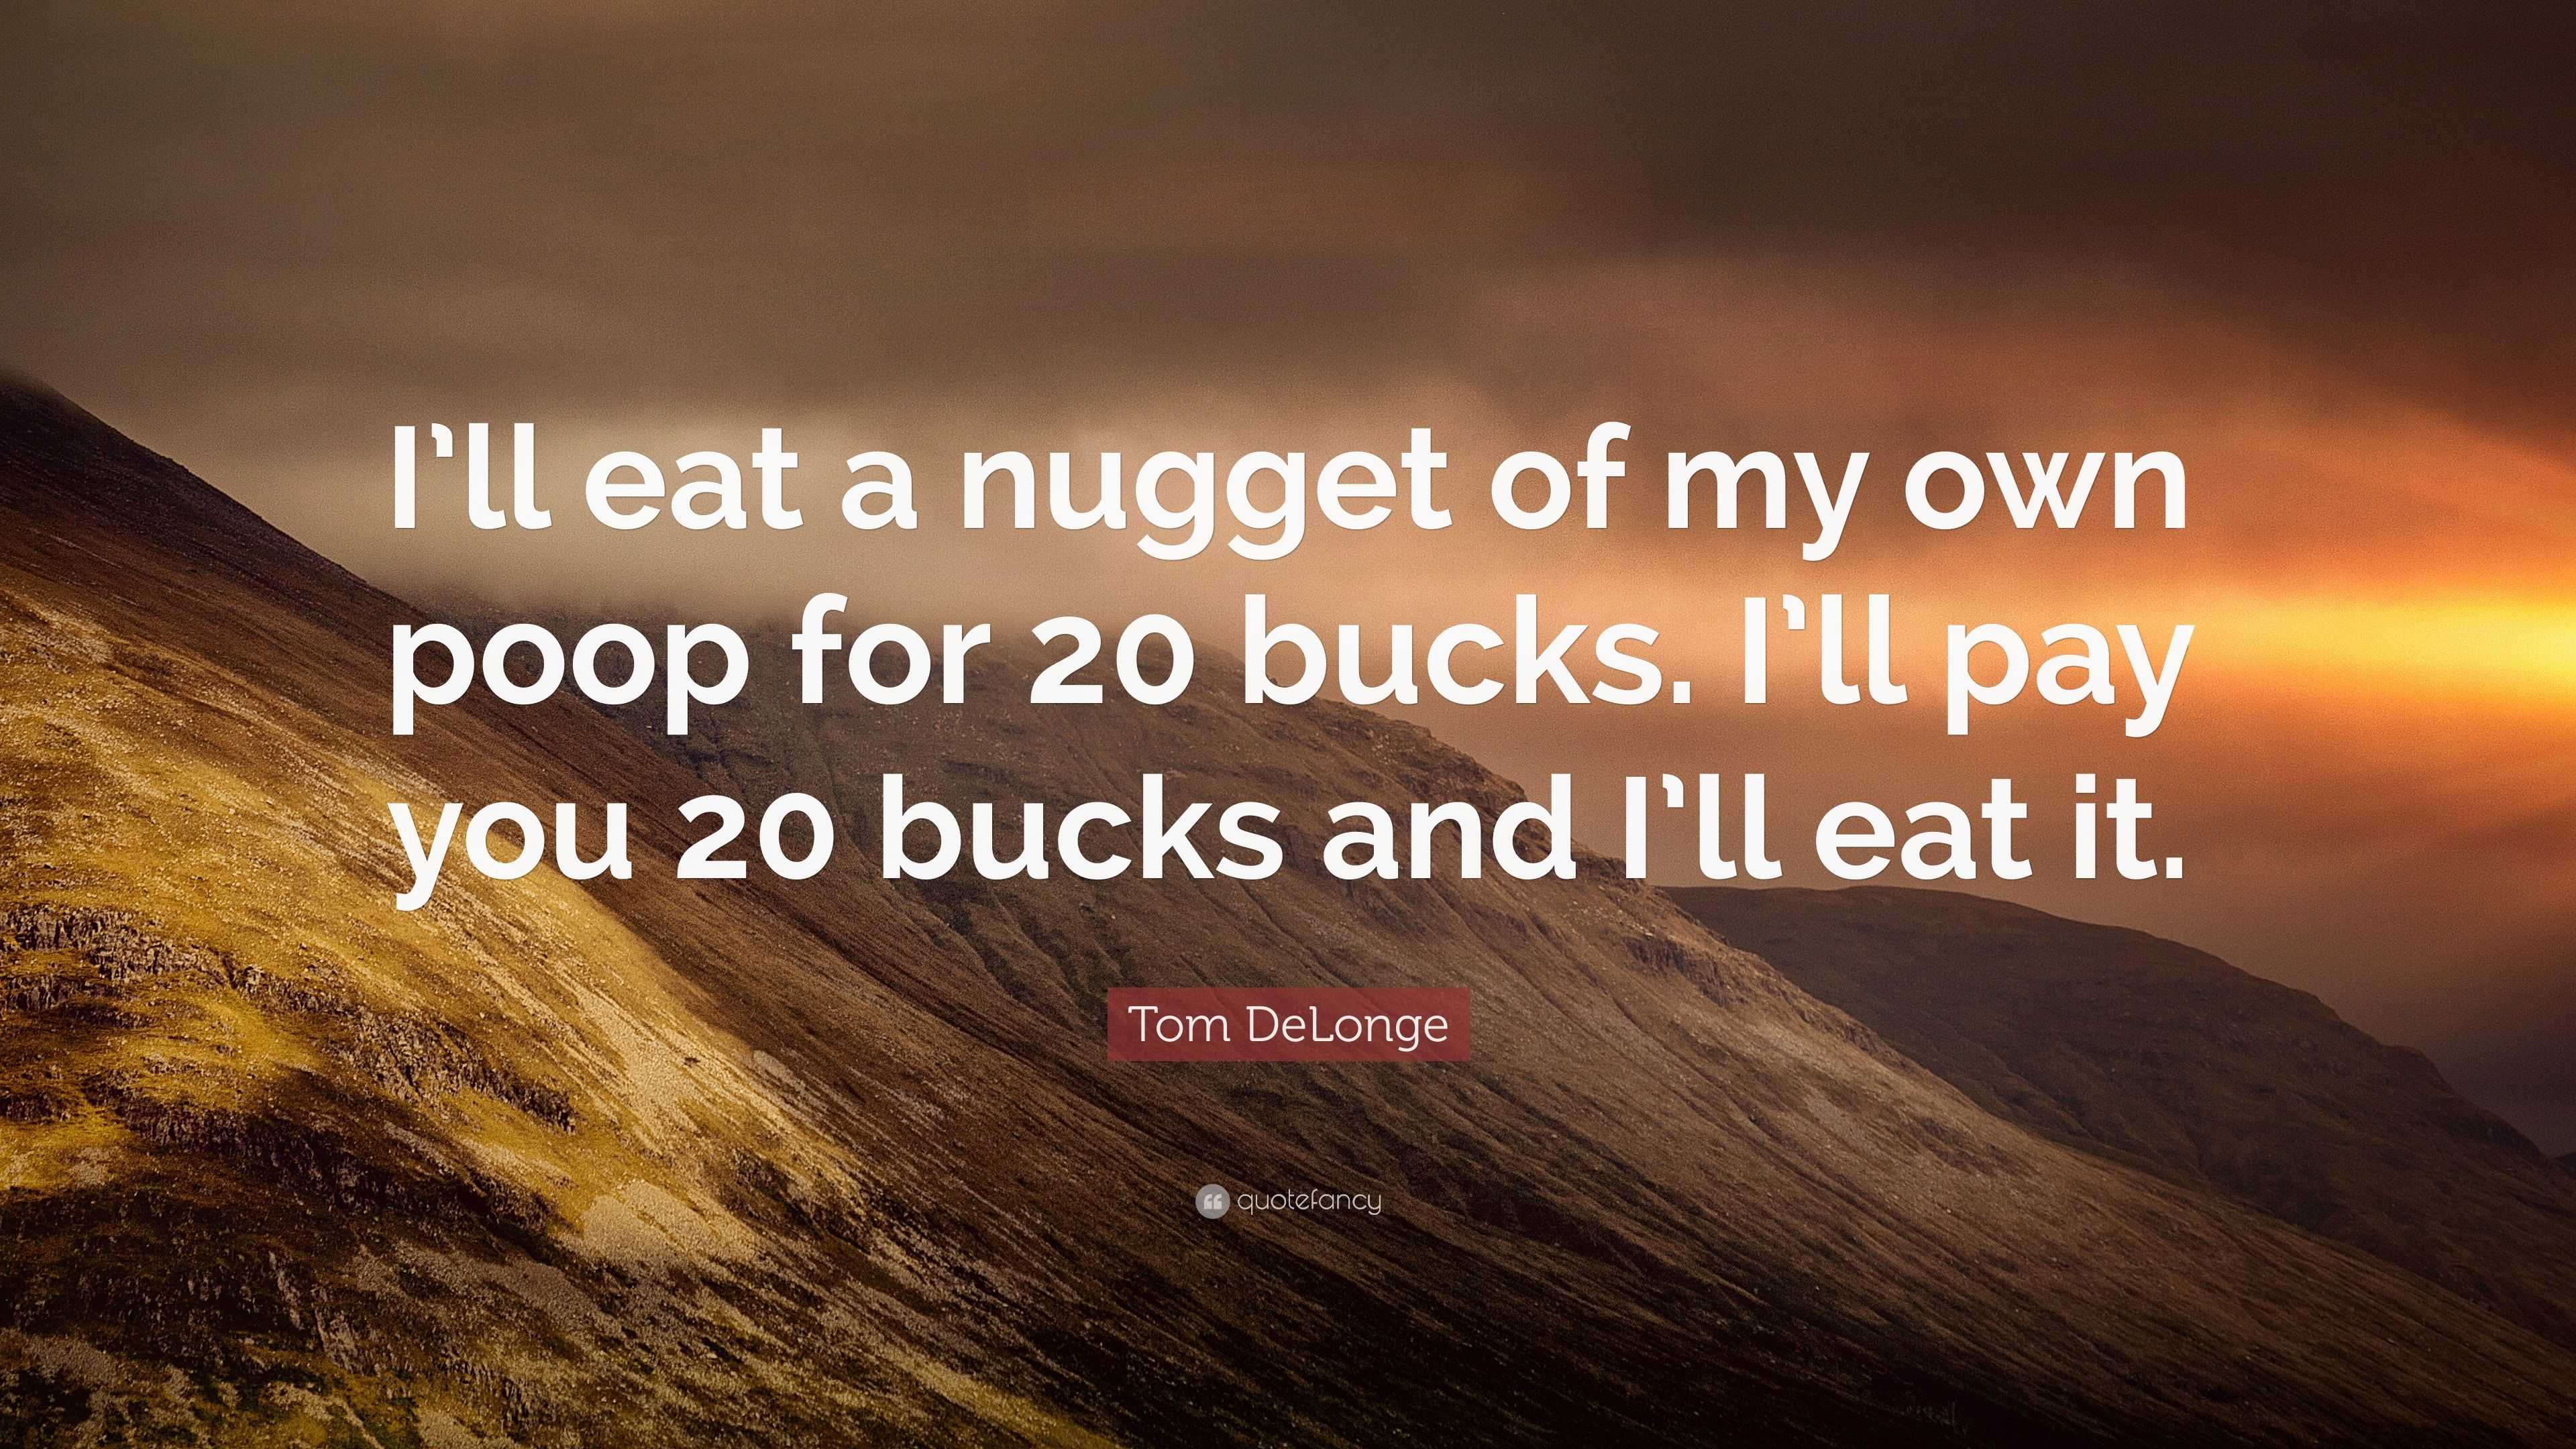 https://quotefancy.com/media/wallpaper/3840x2160/6249233-Tom-DeLonge-Quote-I-ll-eat-a-nugget-of-my-own-poop-for-20-bucks-I.jpg